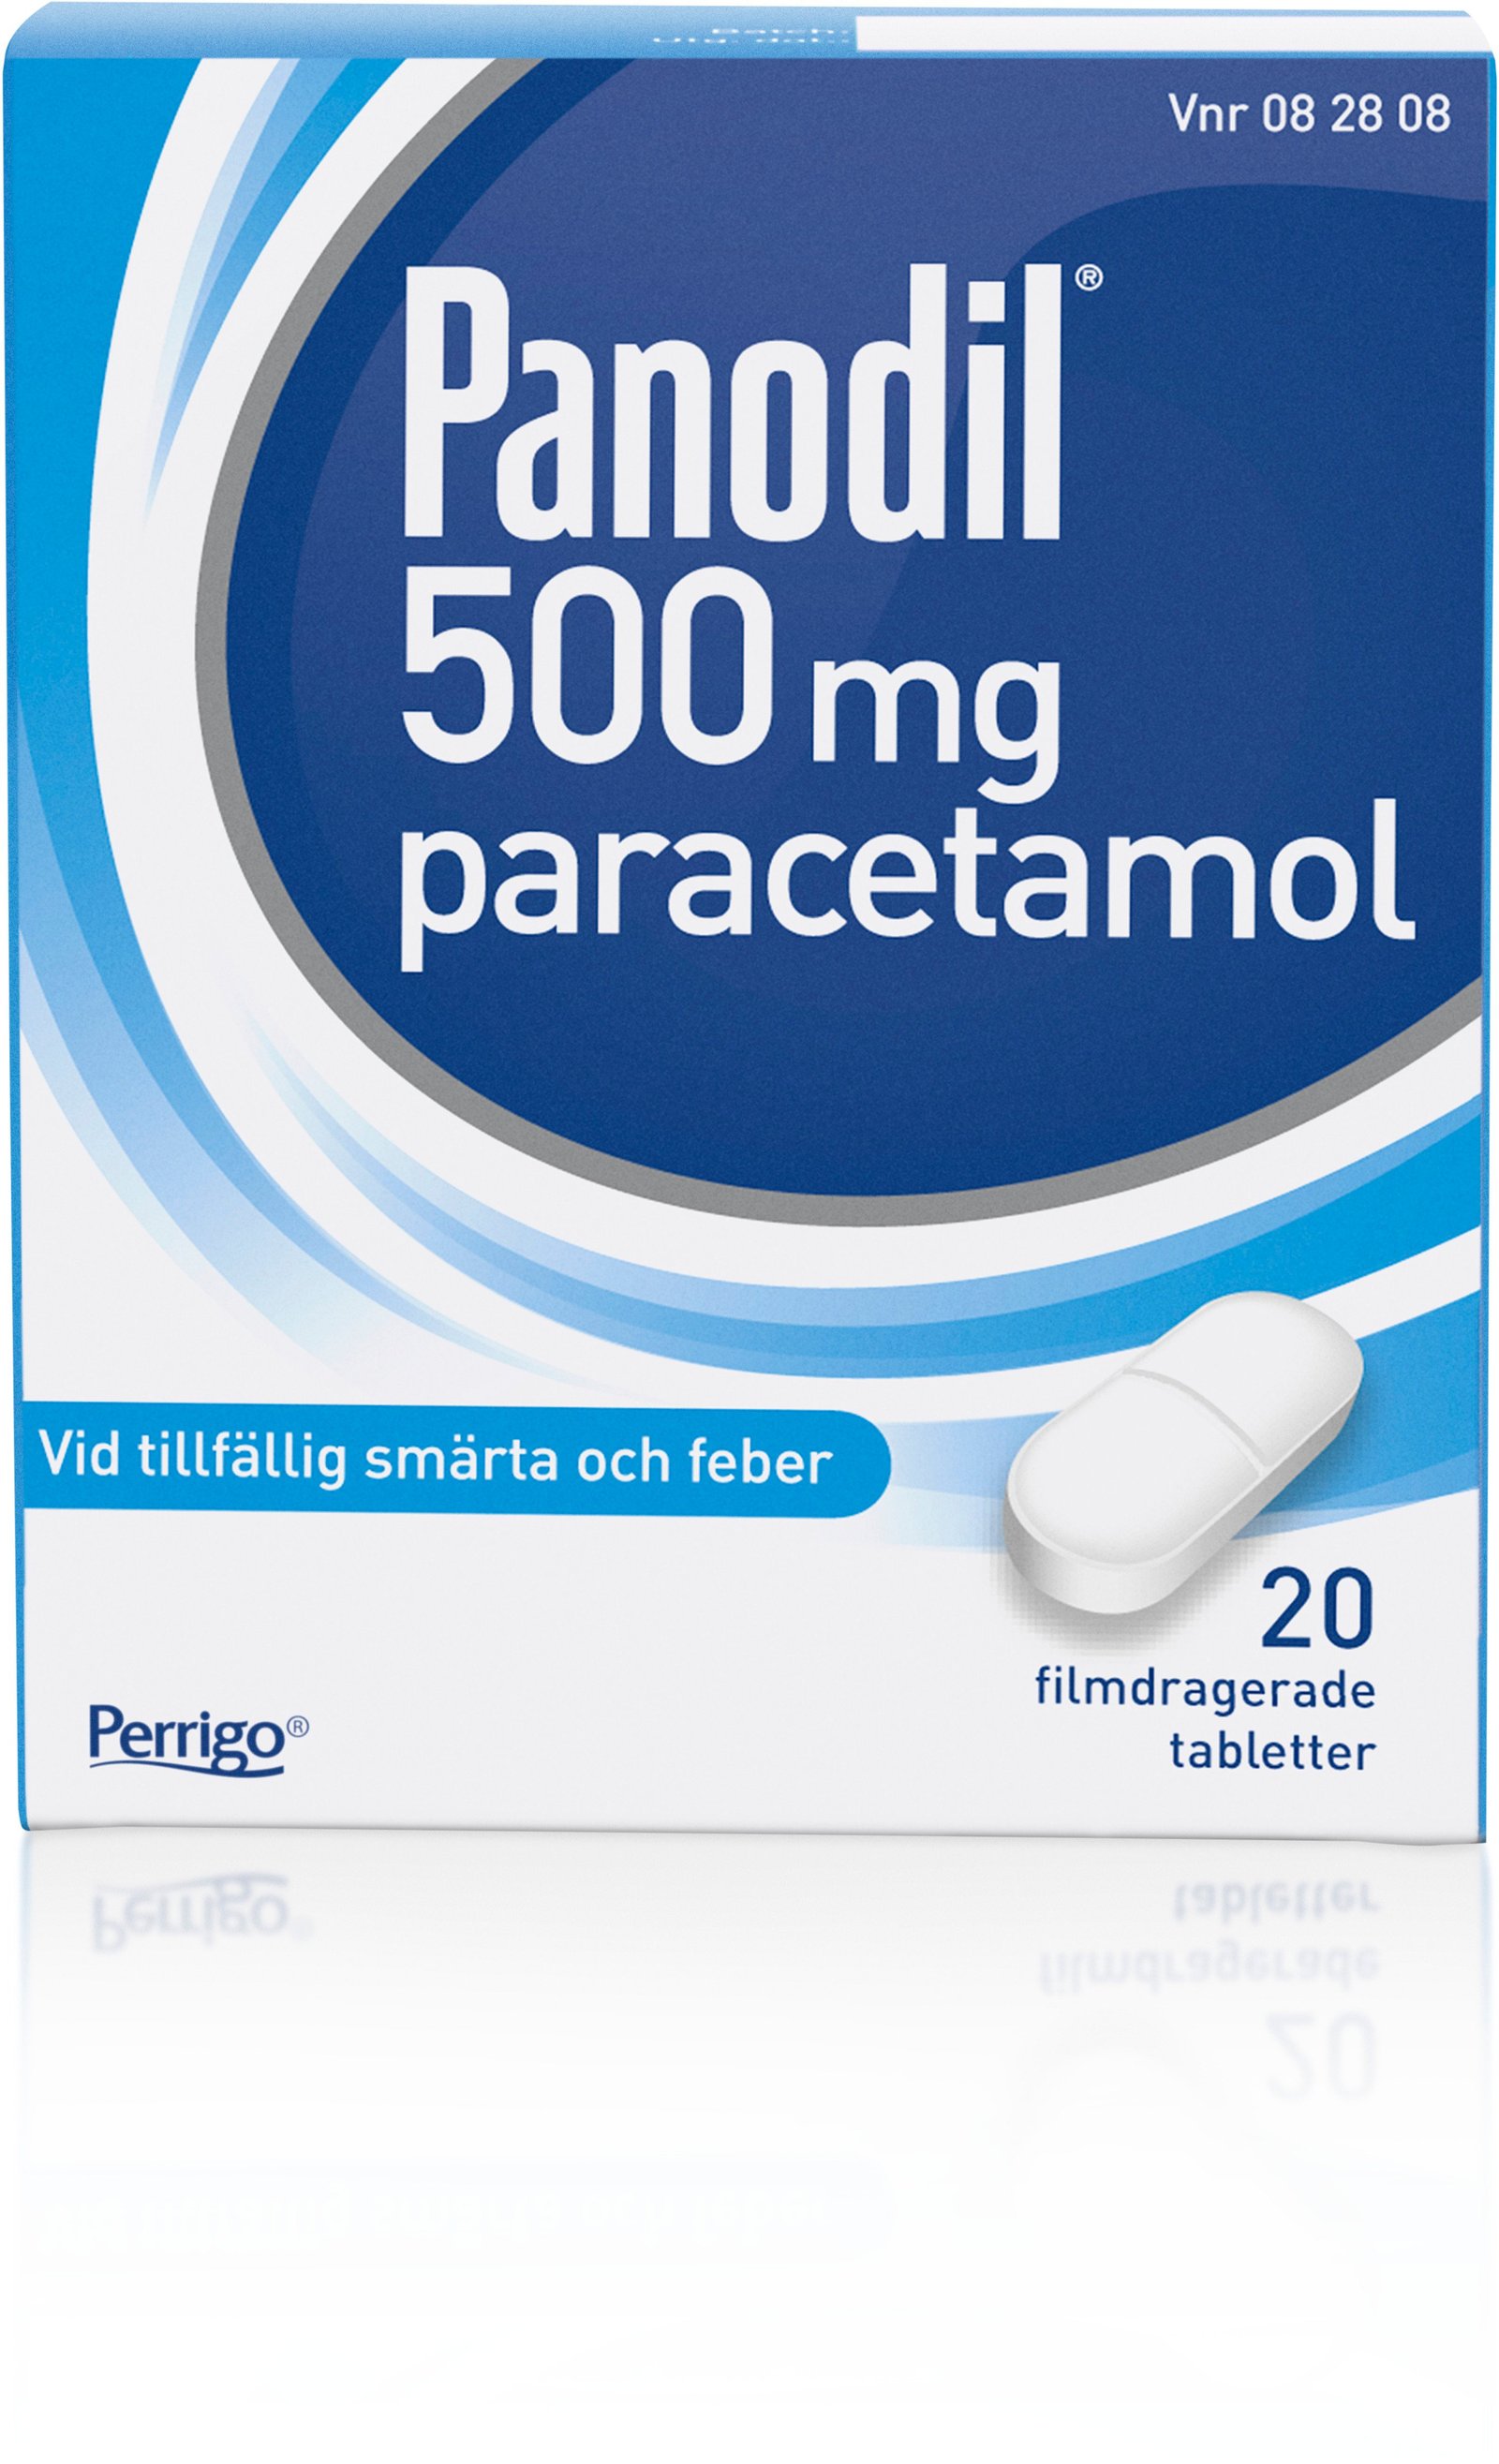 Panodil 500mg Paracetamol 20 tabletter